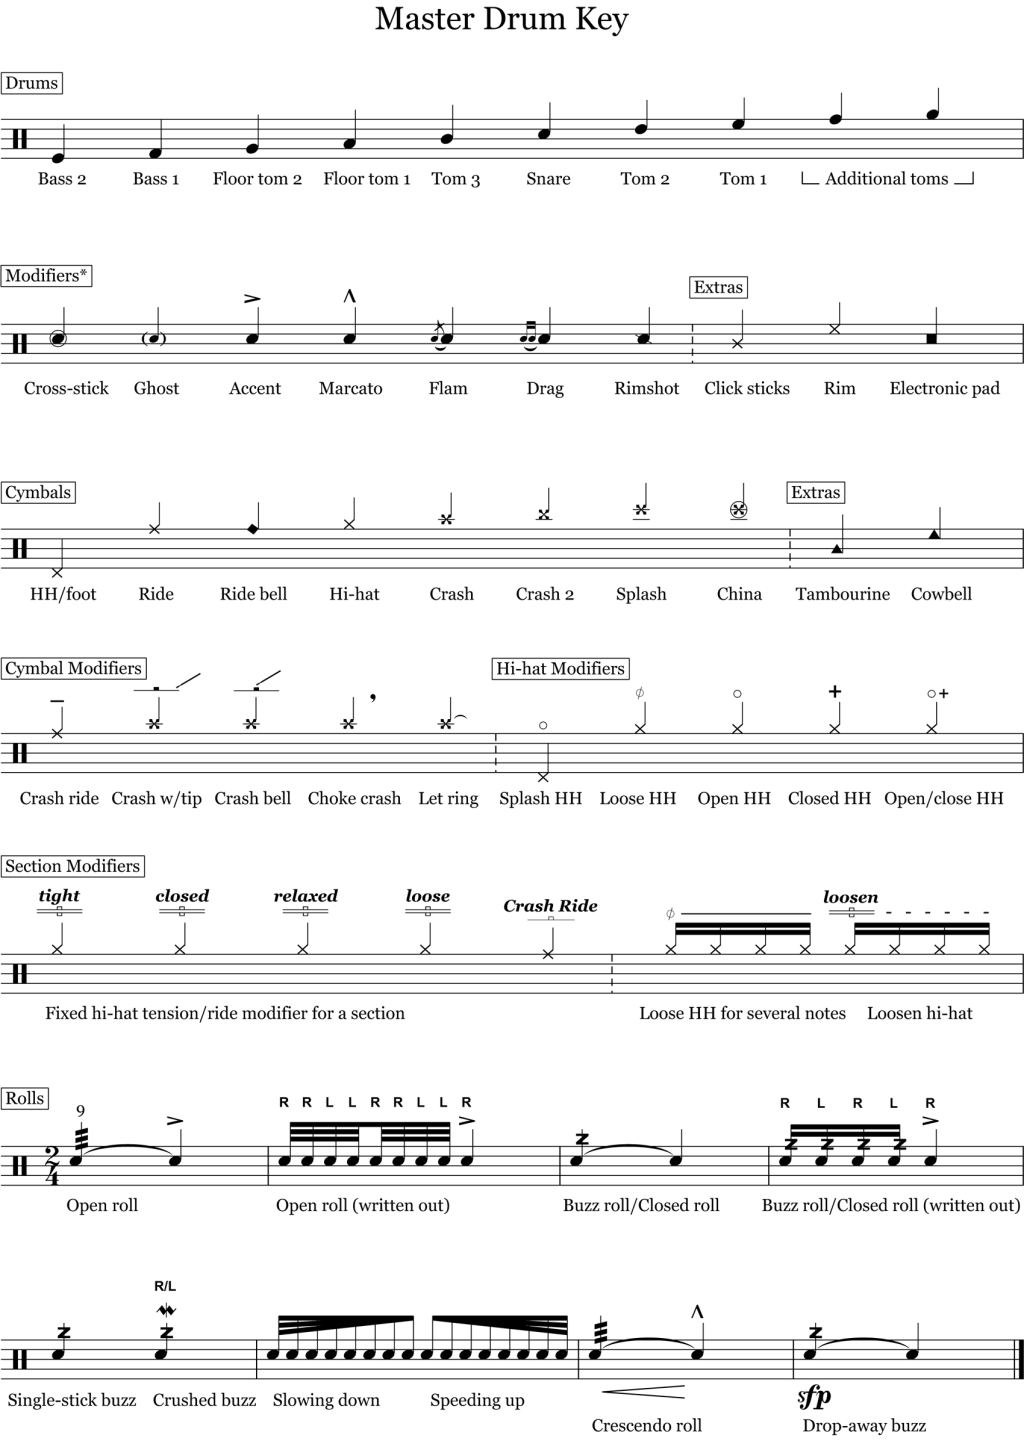 tenor drum notation - Drum Notation Guide - Drum Key